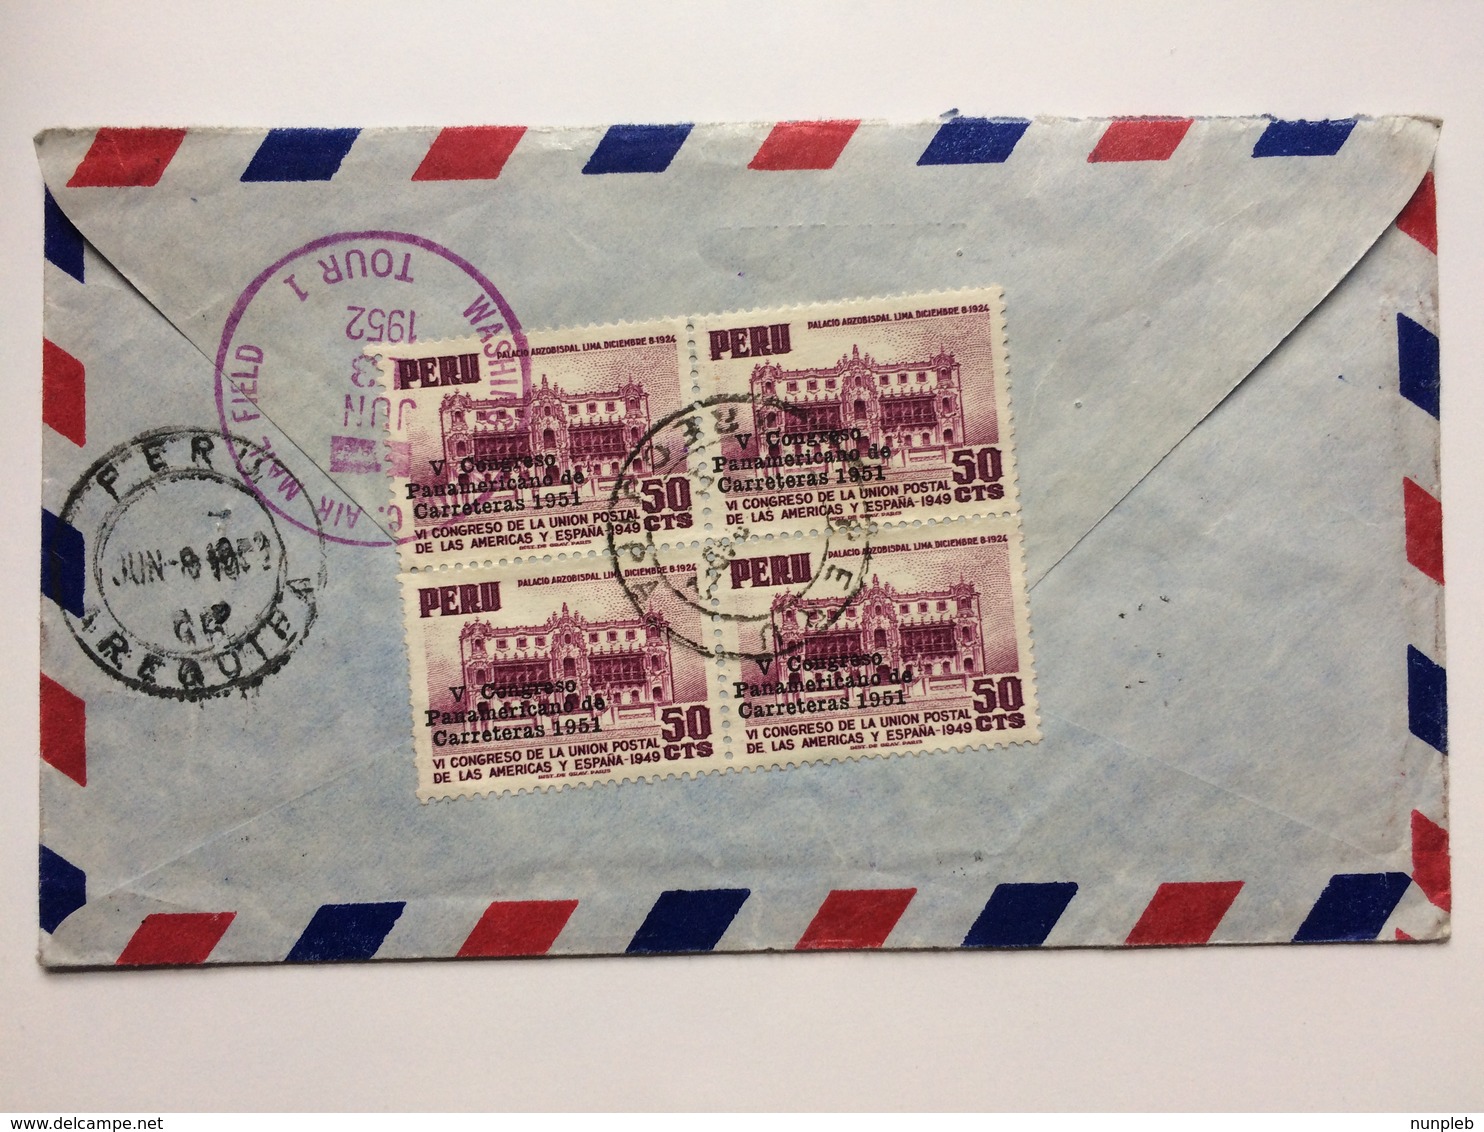 PERU - 1952 Air Mail Cover To England With Purple Washington Air Mail Field Transit Mark - Pérou